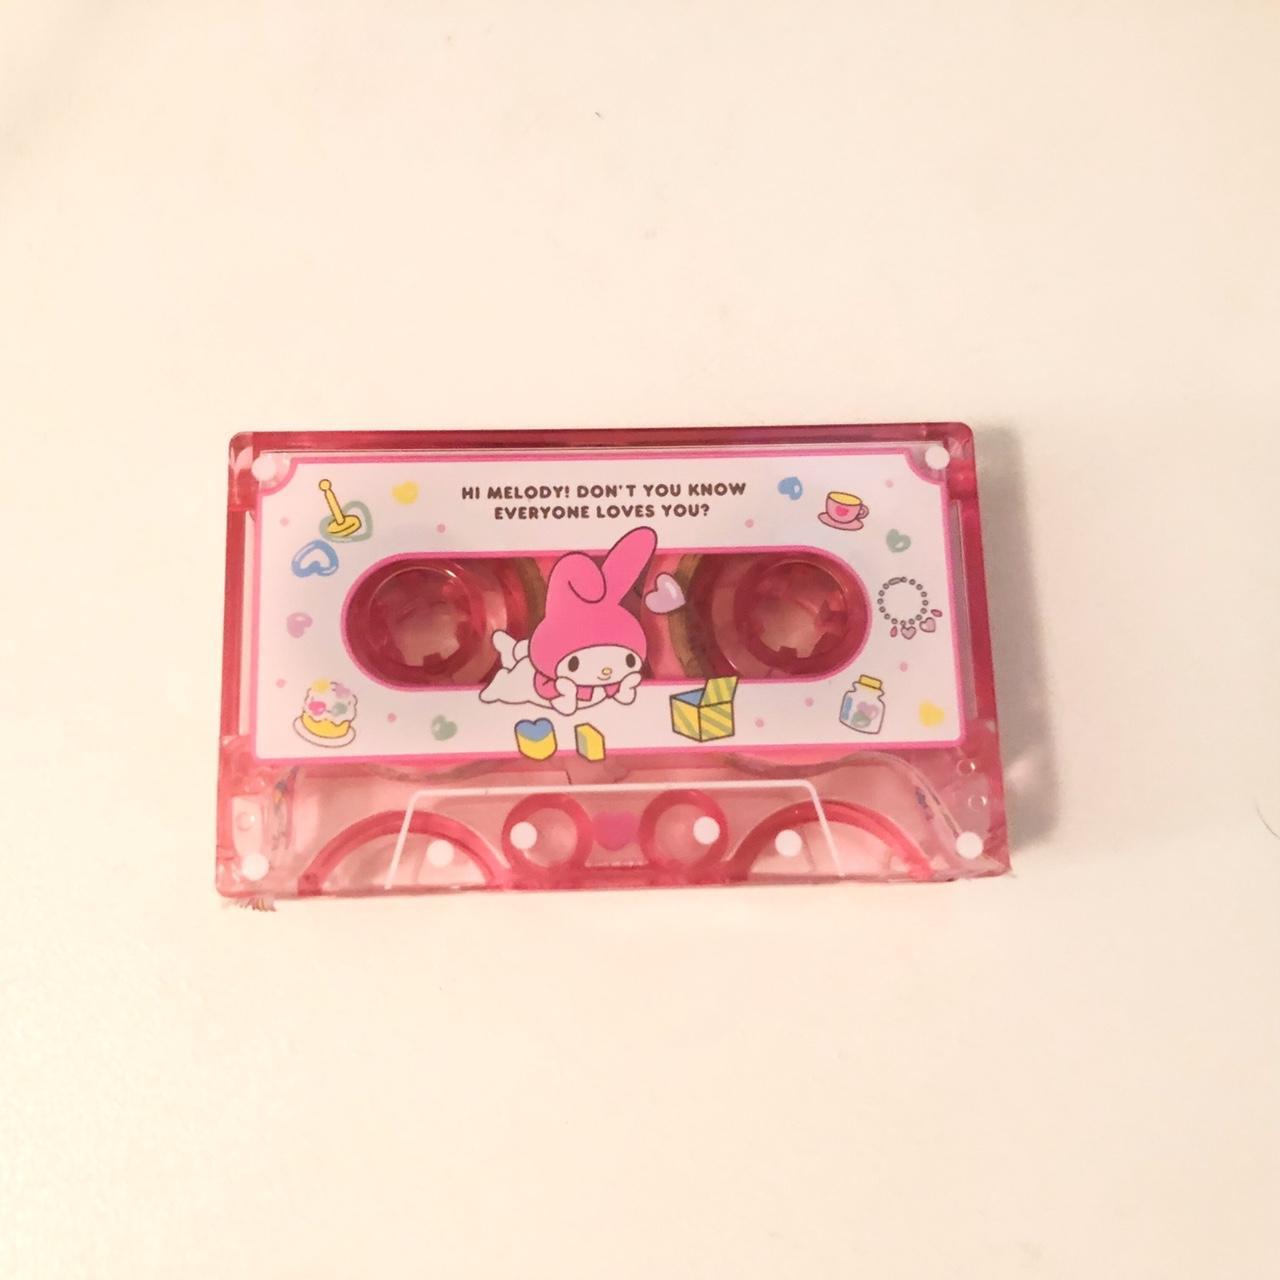 Sanrio My Melody Cassette Washi Tape Dispenser Depop 